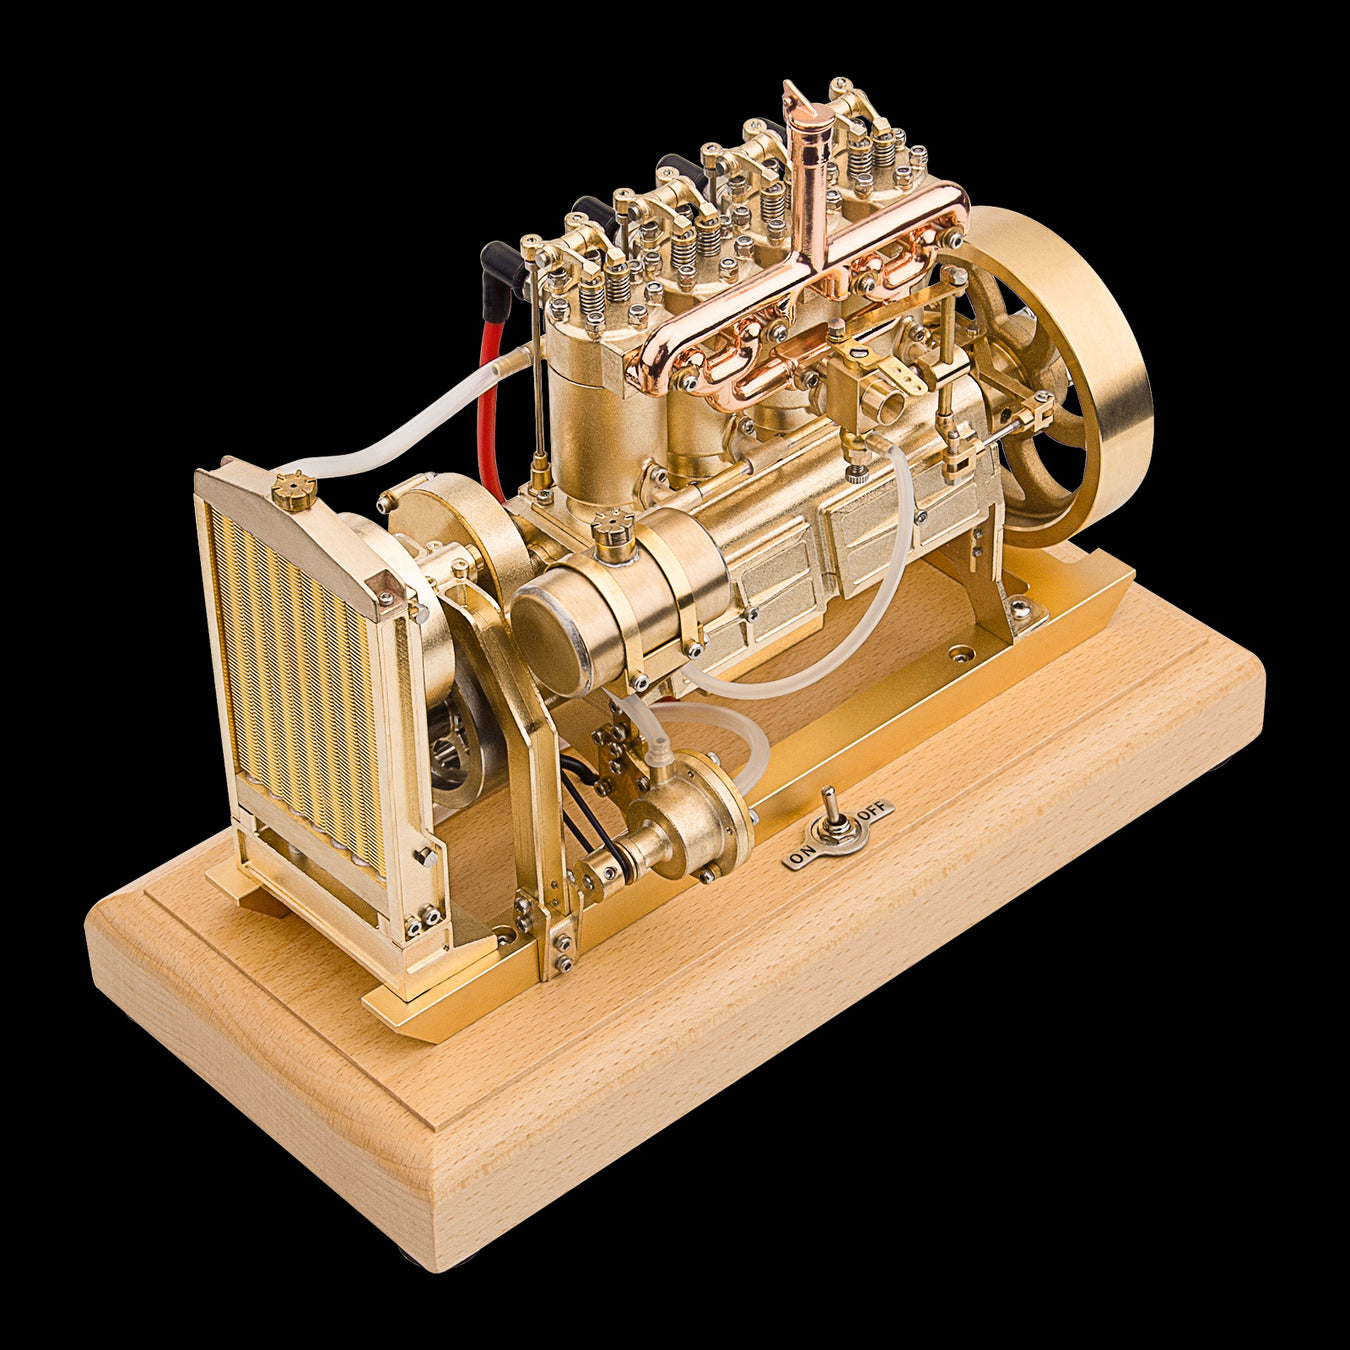 H75 Internal Combustion Engine